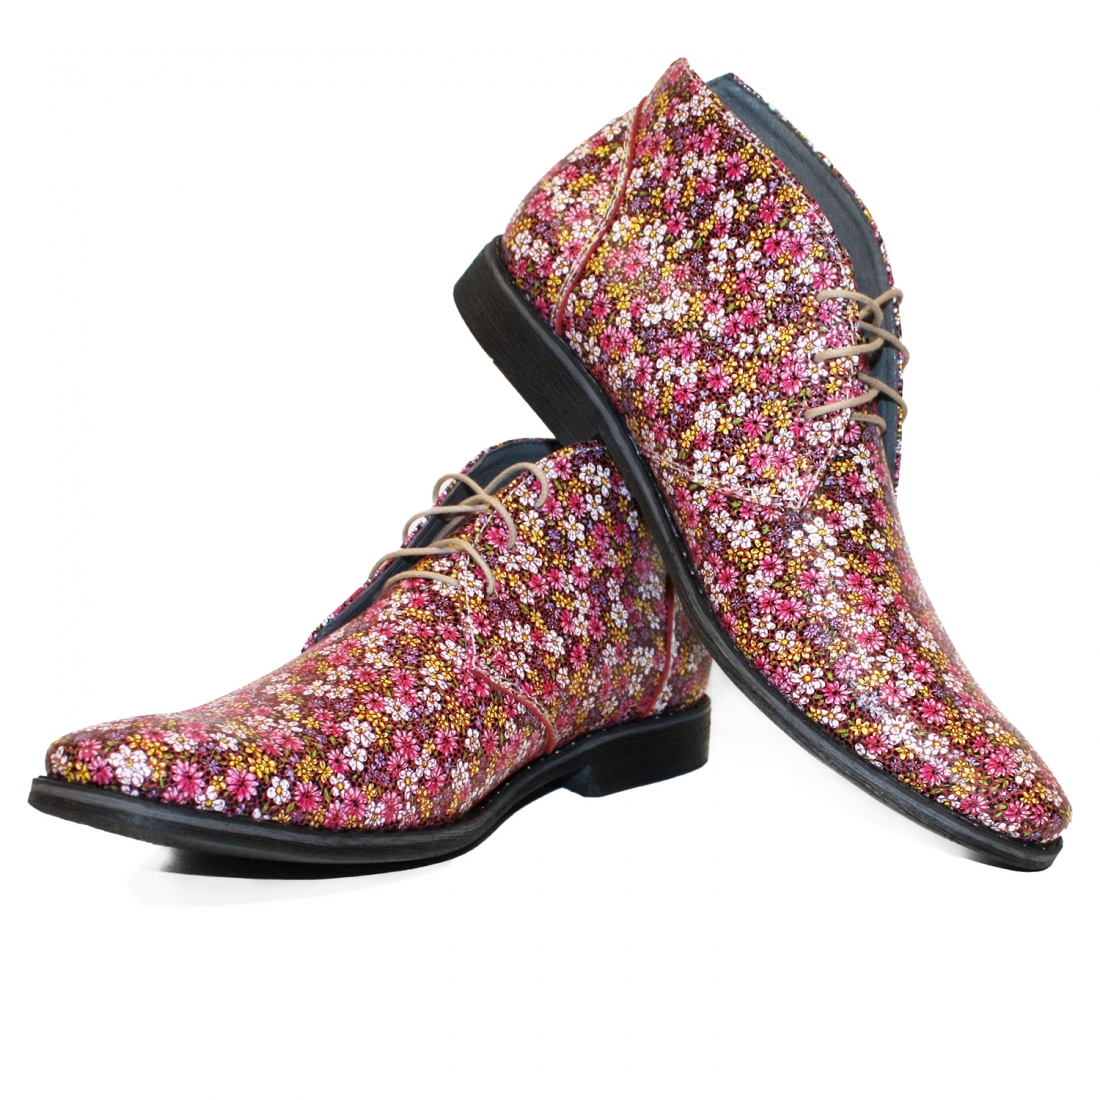 Modello Floretto - Chukka Boots - Handmade Colorful Italian Leather Shoes